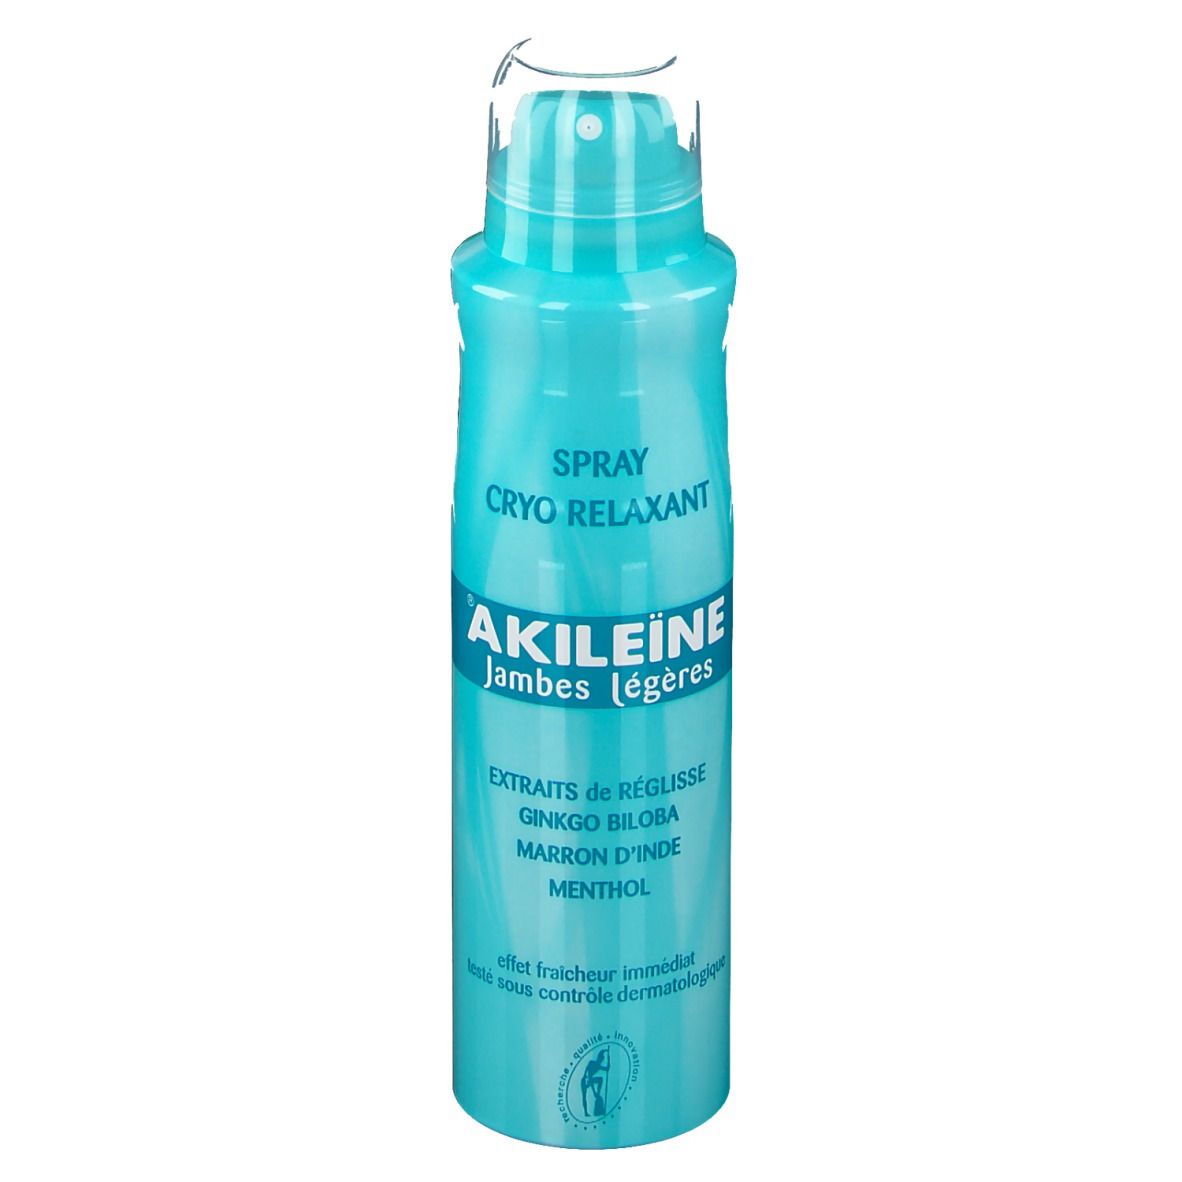 Akileine® Spray Cryo Relaxant Jambes Légères